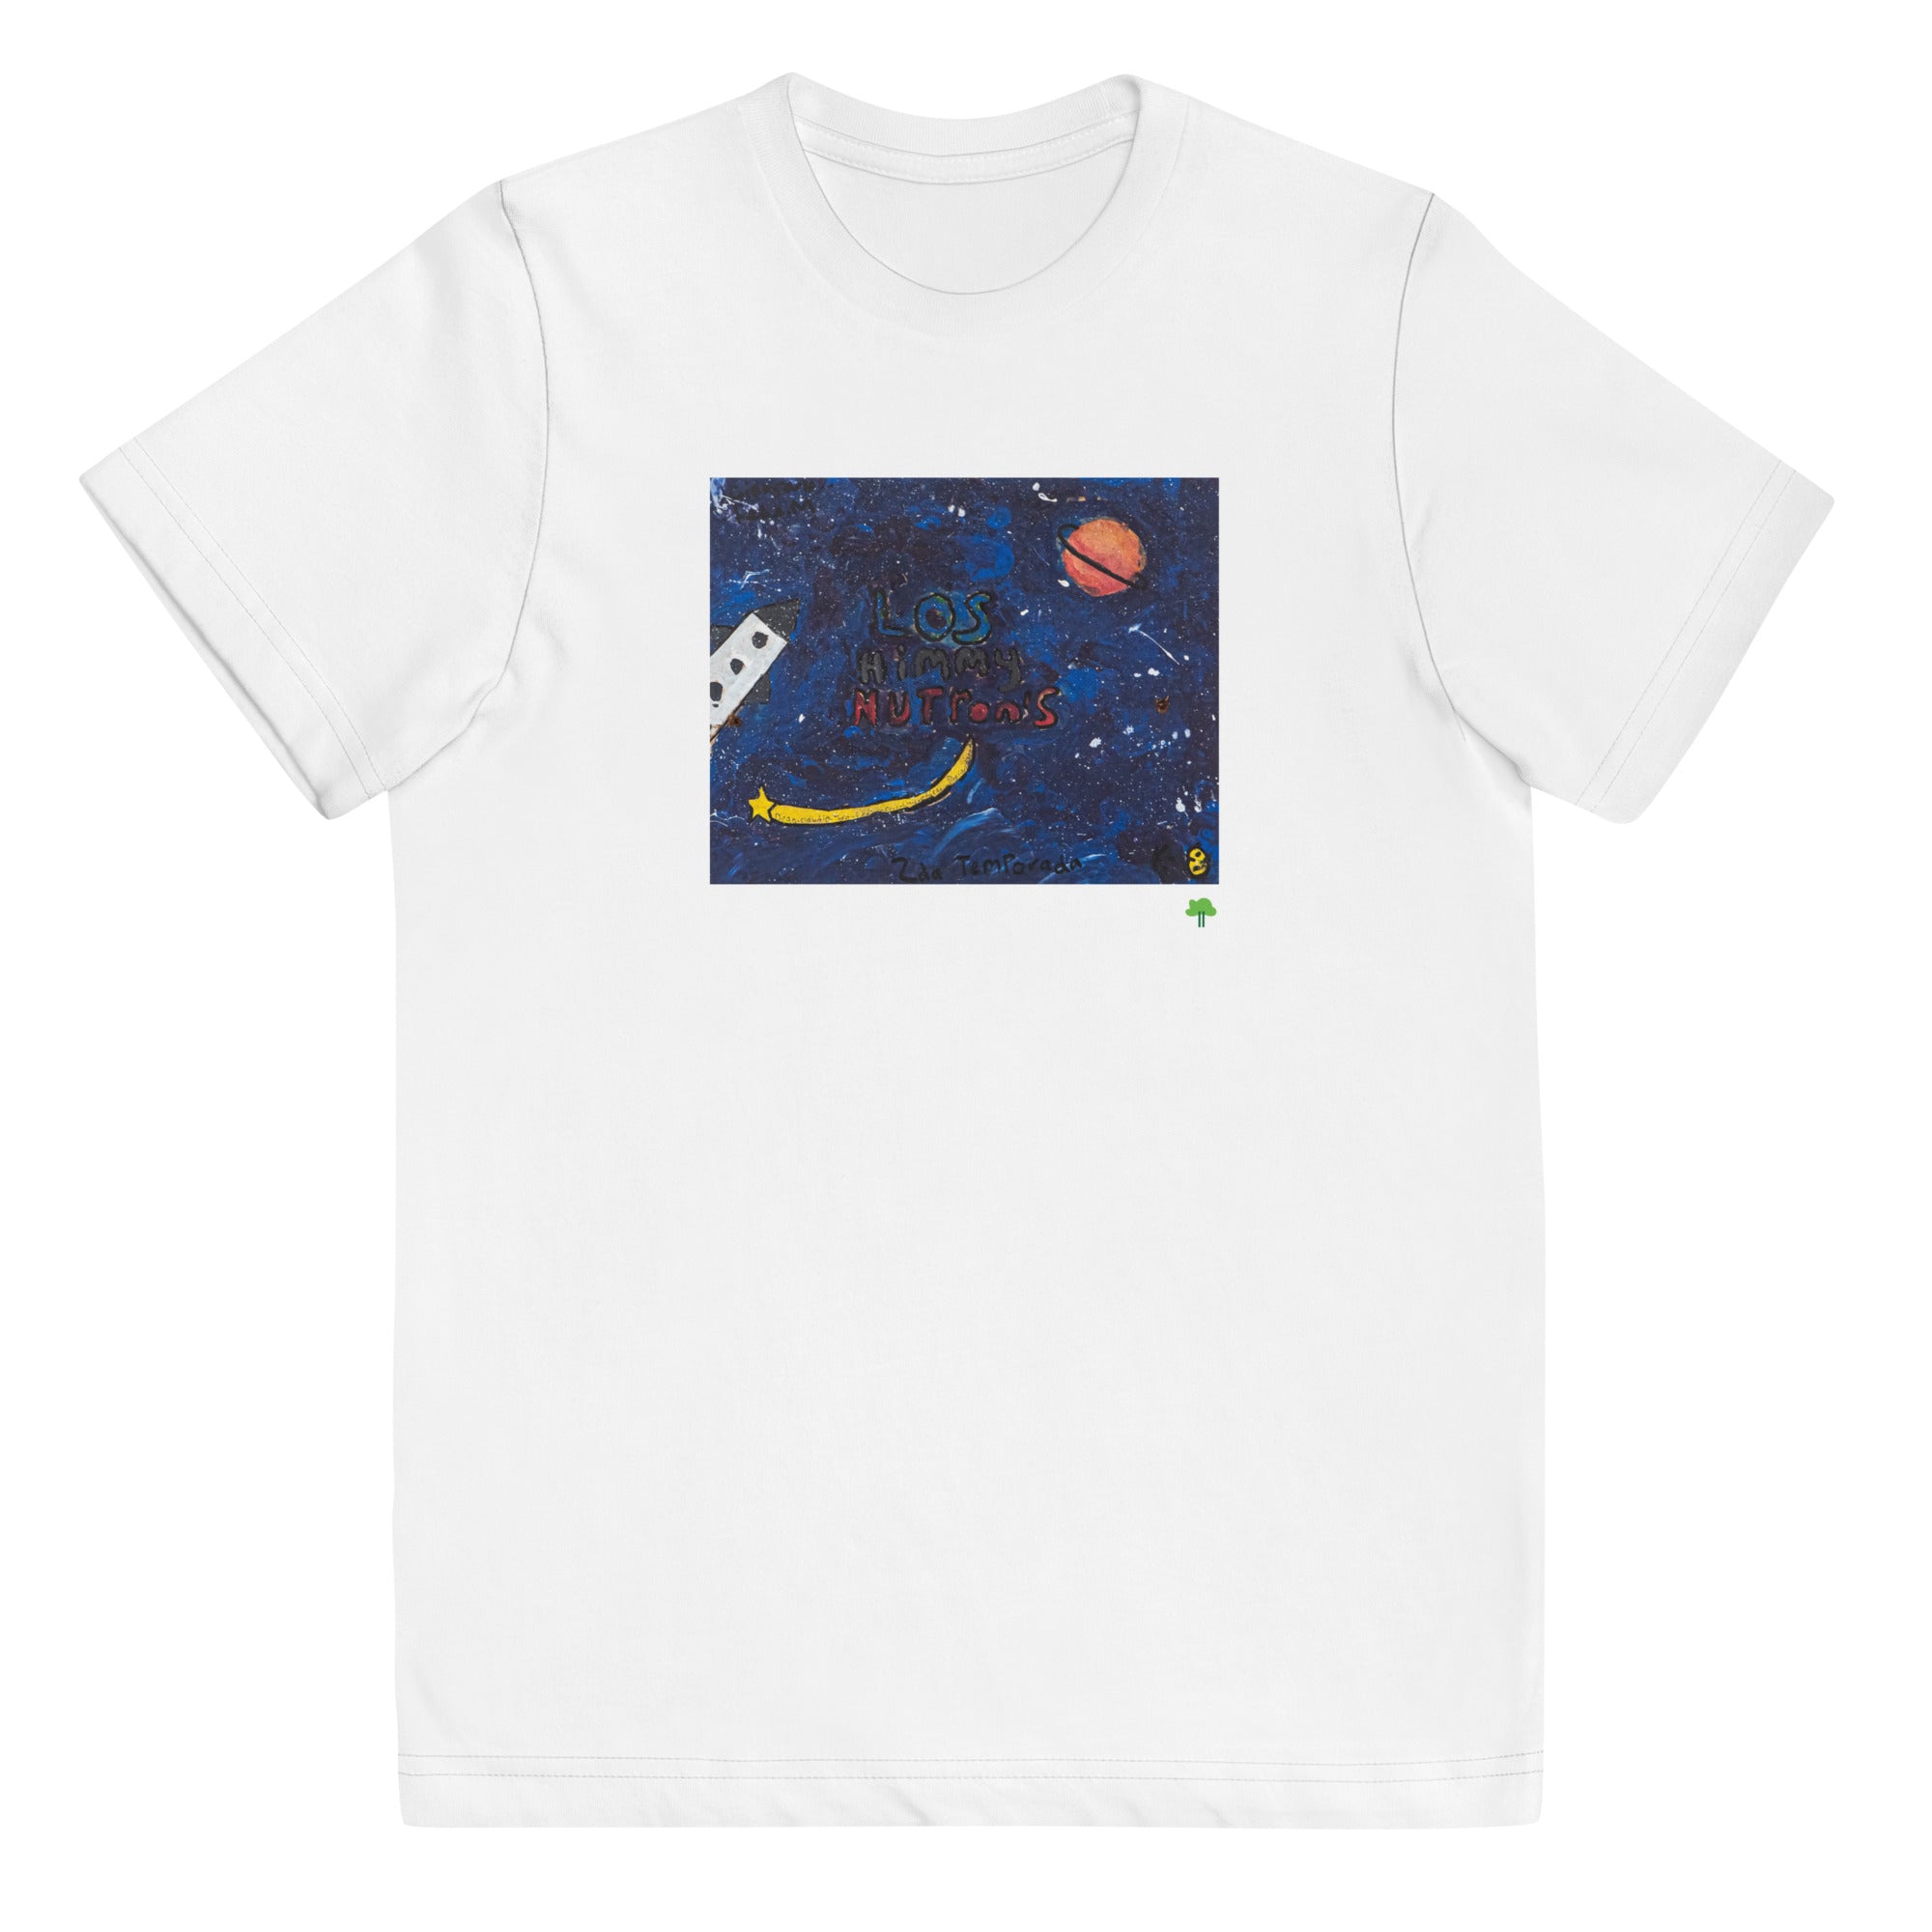 II Temp - Sabana - K8 | Youth jersey t-shirt